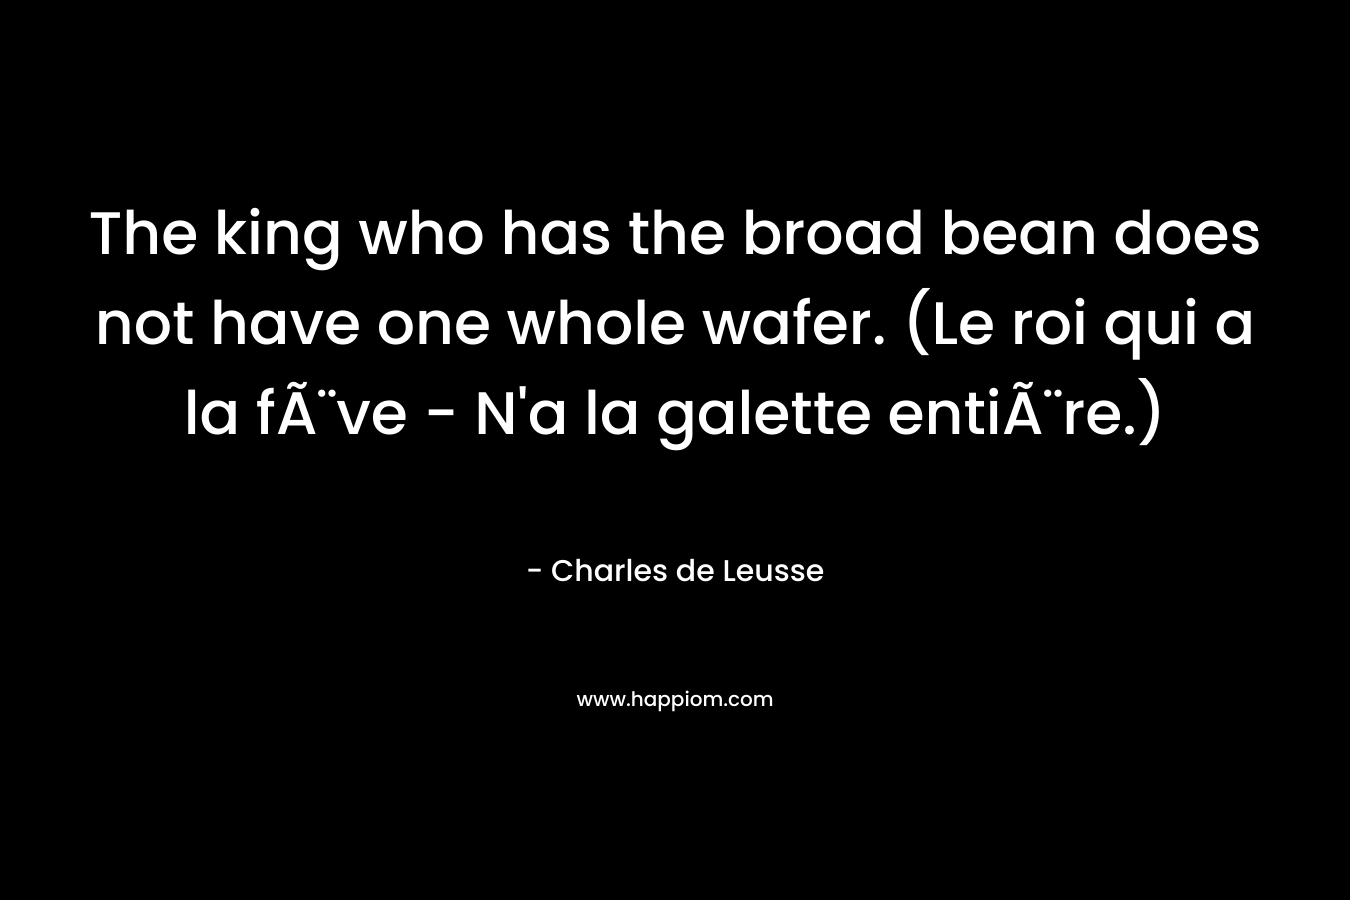 The king who has the broad bean does not have one whole wafer. (Le roi qui a la fÃ¨ve – N’a la galette entiÃ¨re.) – Charles de Leusse